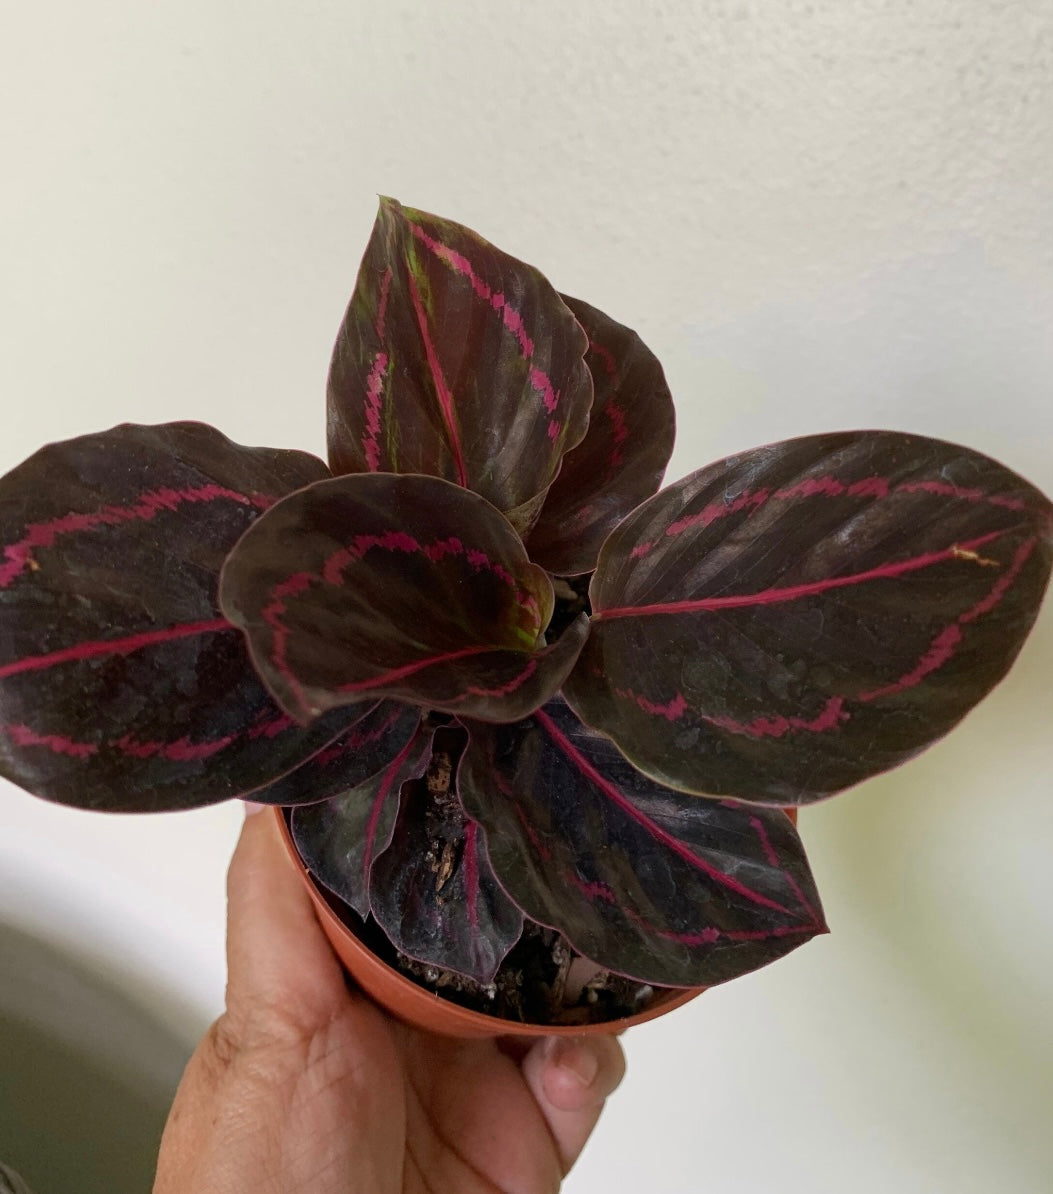 Calathea Dottie Roseopicta in Black Prayer plant